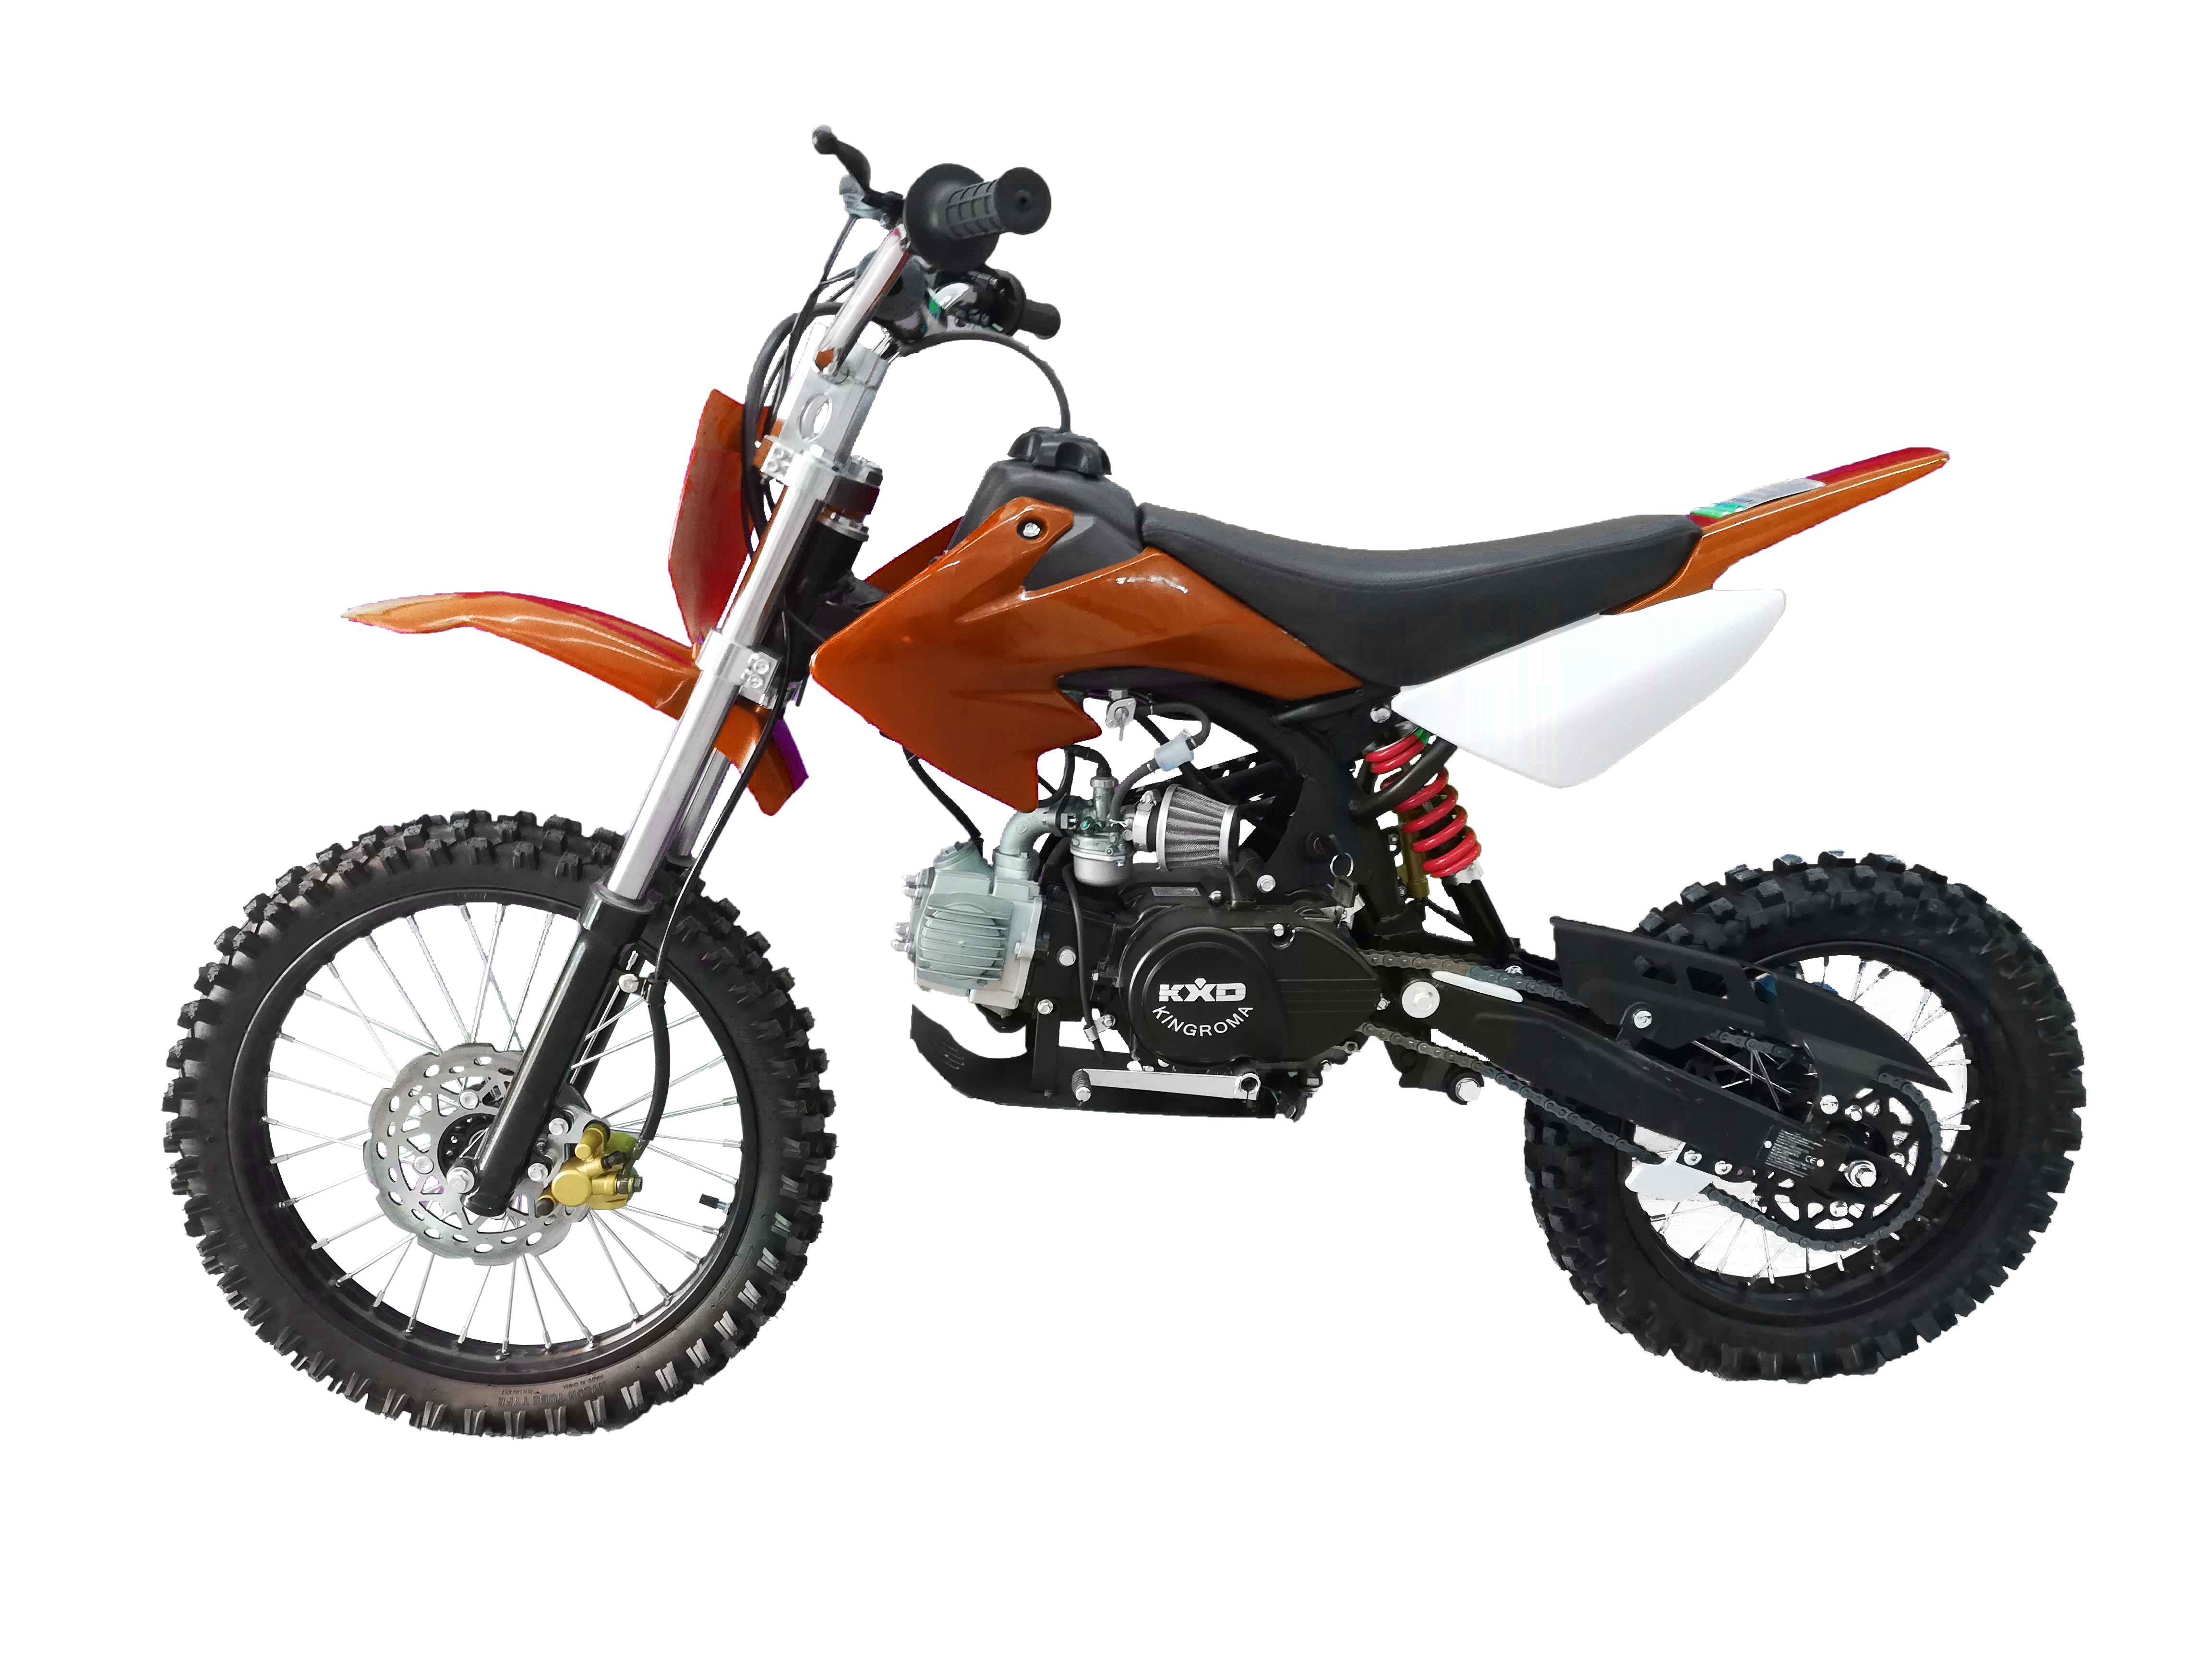 Motocicleta cross copii kxd 125cc db 607 4t roti 17"/14" culoare portocaliu pornire la pedala